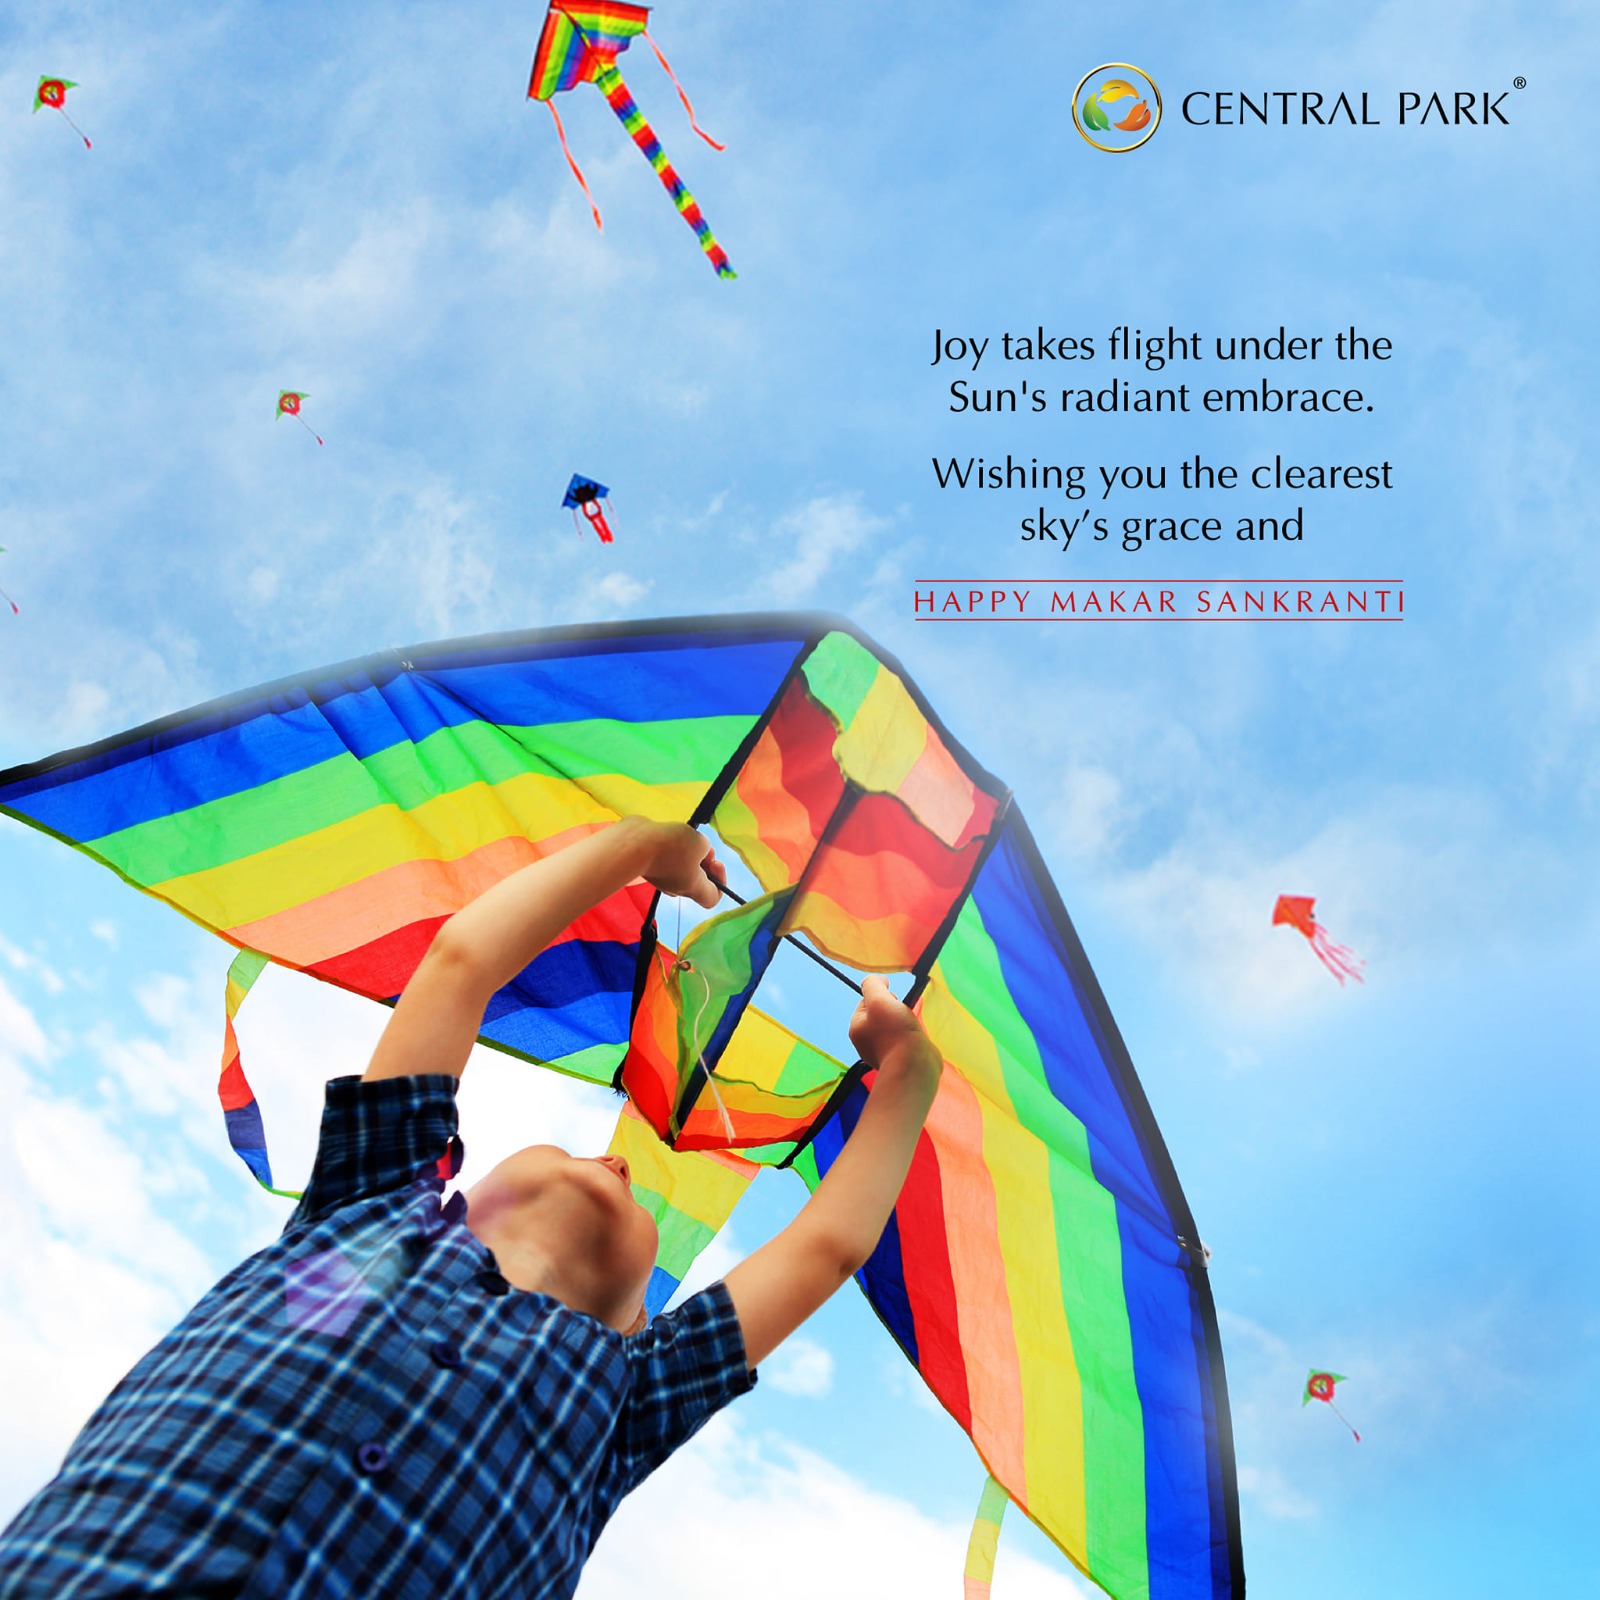 Sky-High Delight: Central Park's Makar Sankranti Kite Festival at [Project Name], [Location] Update